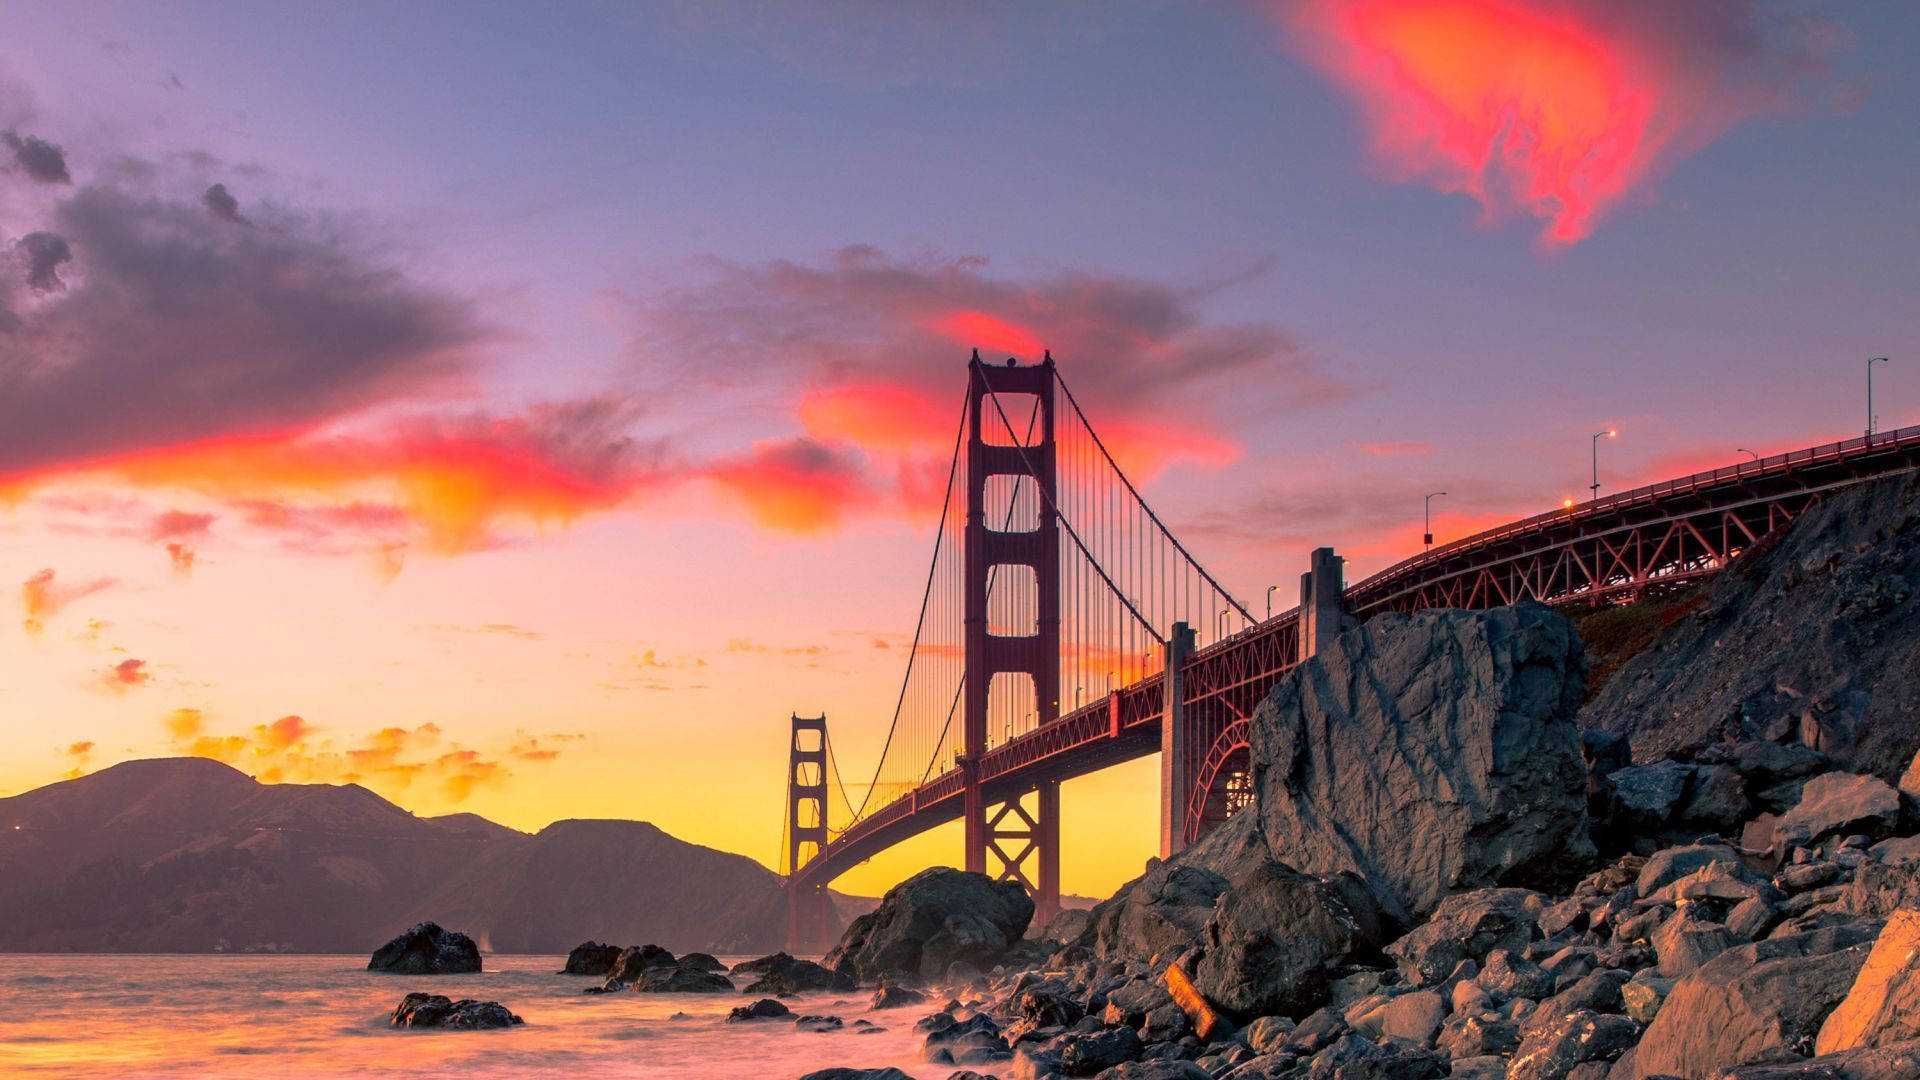 The Golden Gate Bridge In San Francisco, Usa